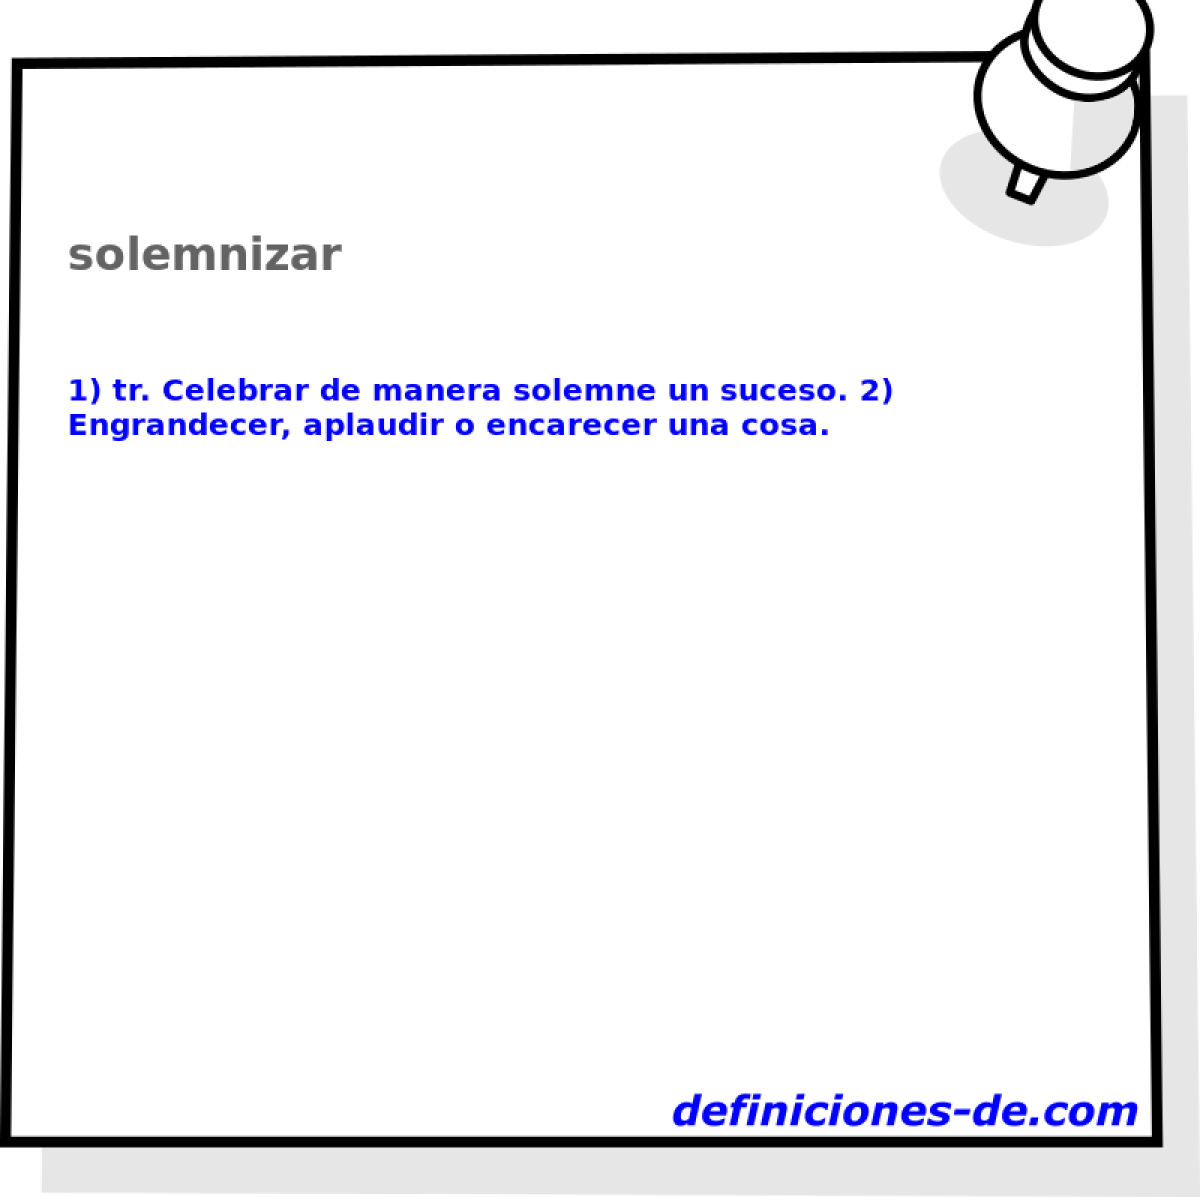 solemnizar 